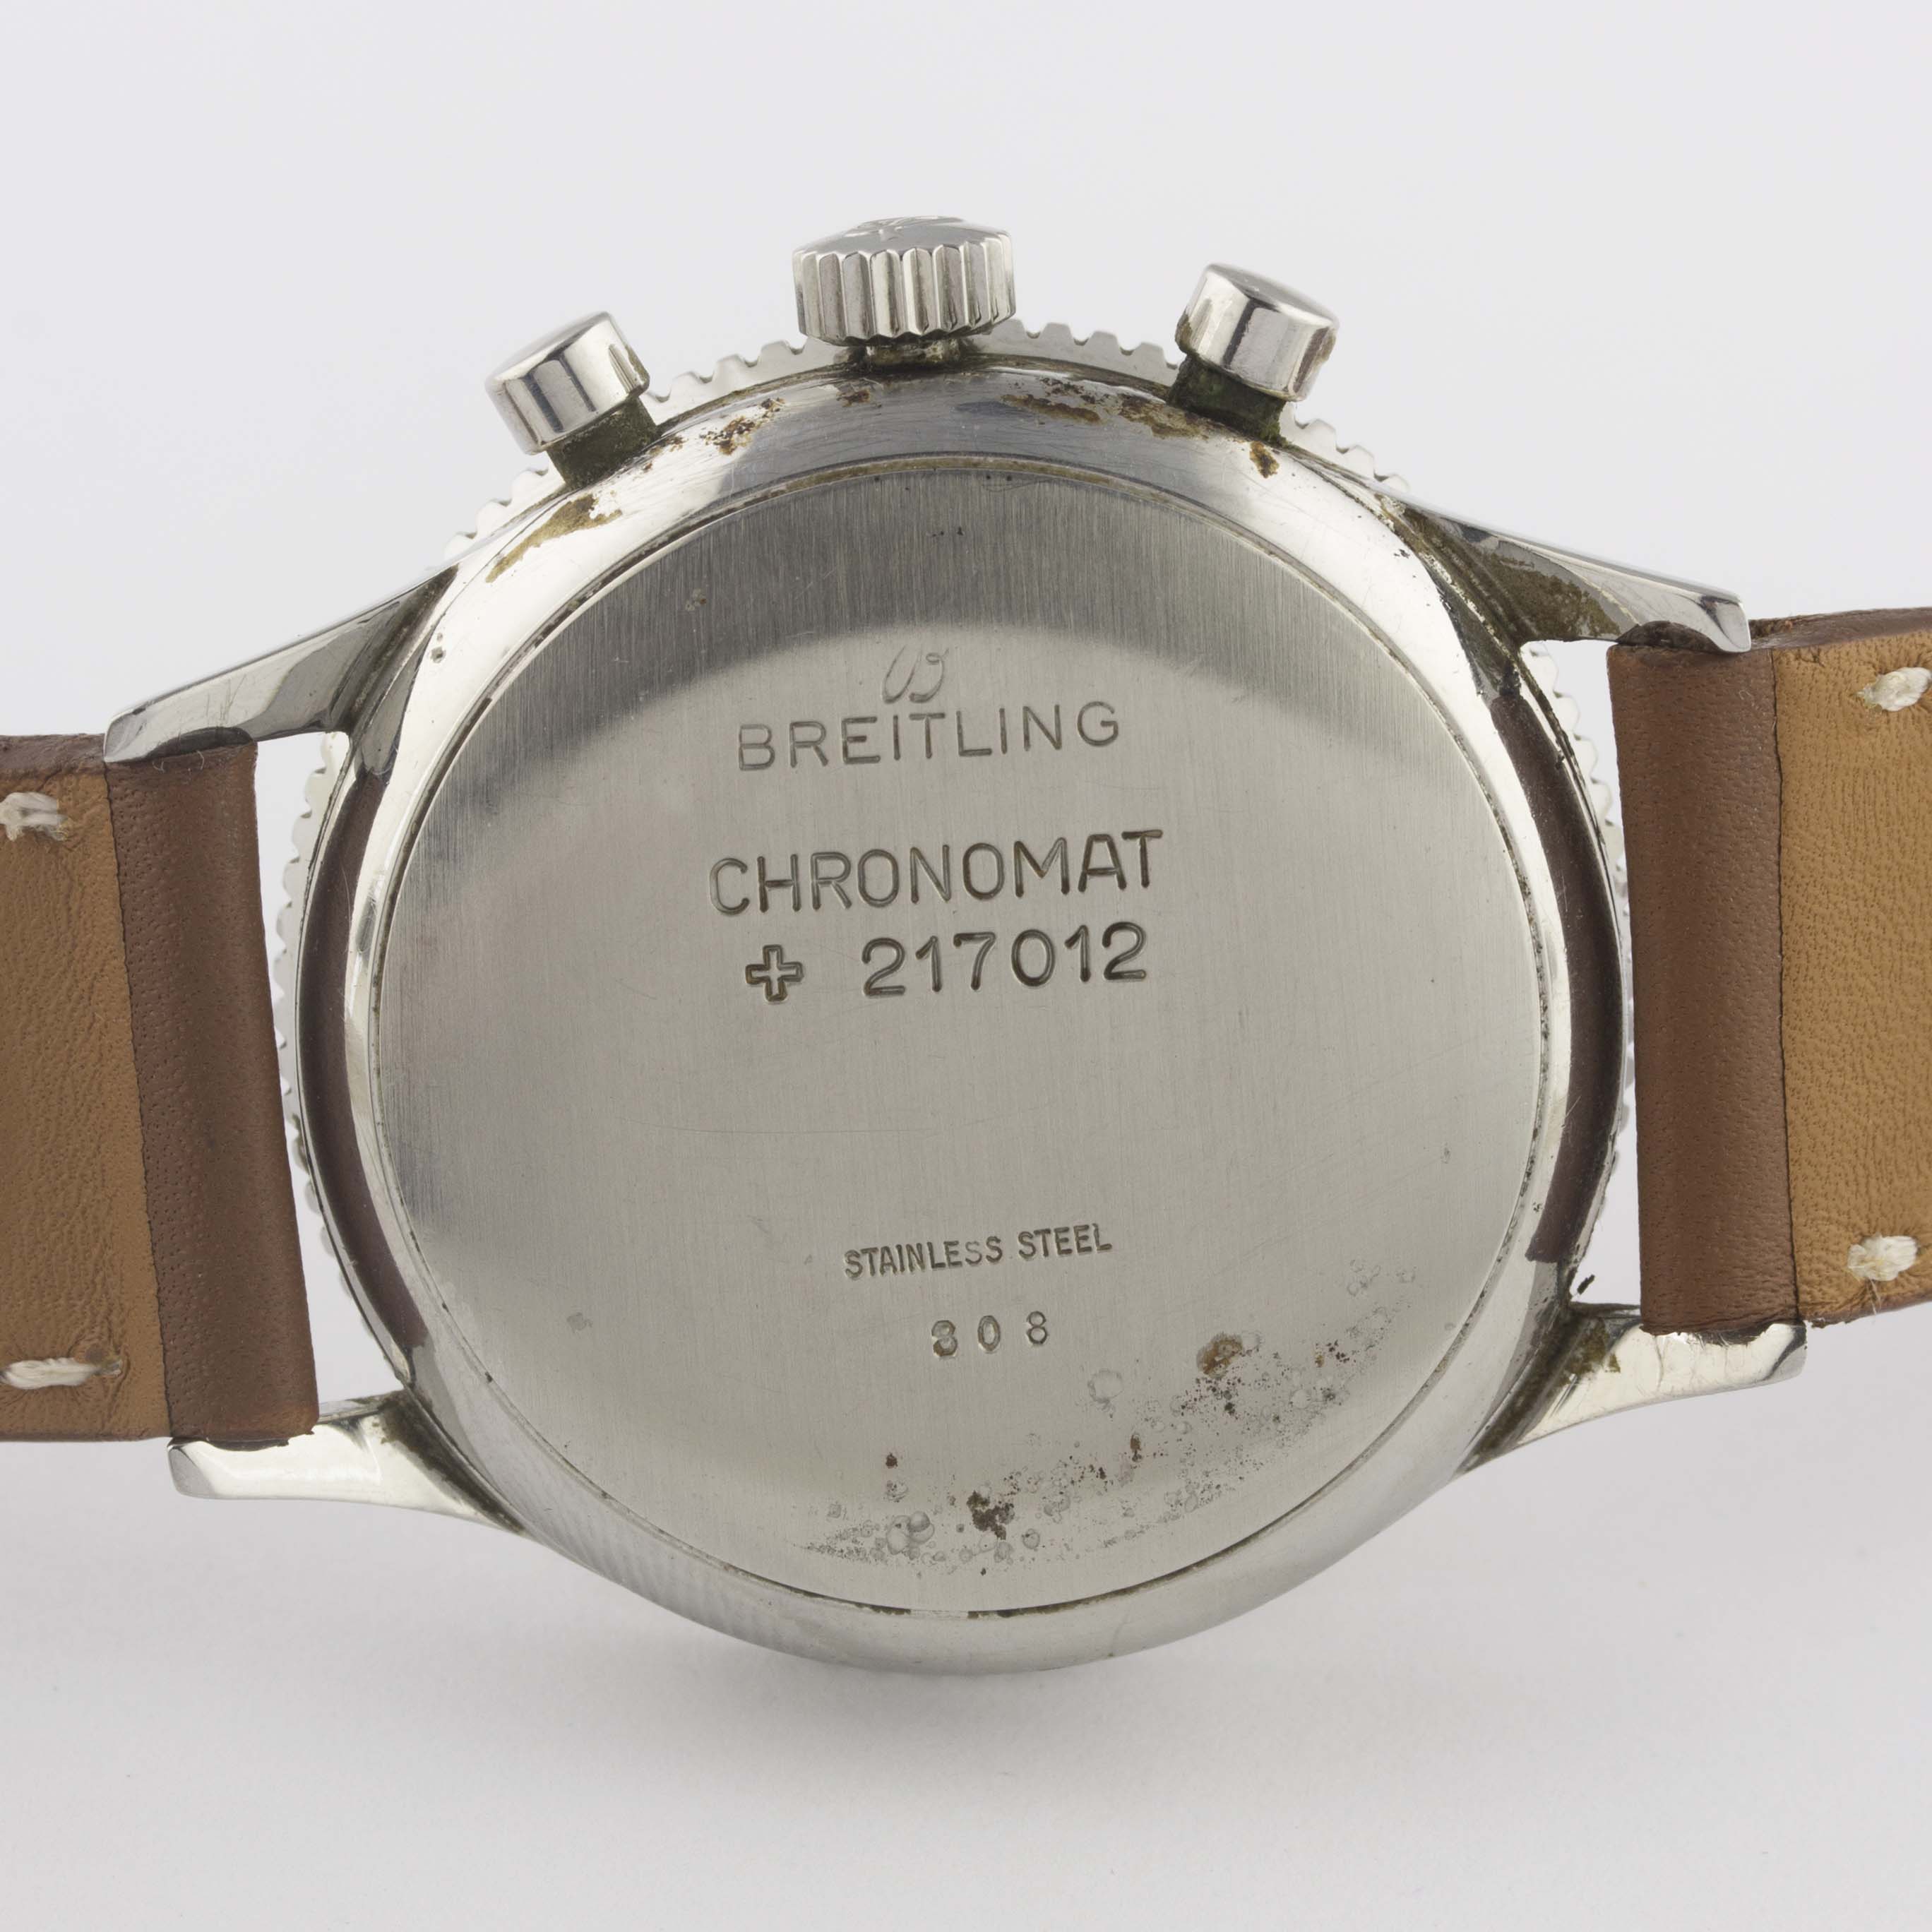 A RARE GENTLEMAN'S STAINLESS STEEL BREITLING LIP CHRONOMAT CHRONOGRAPH WRIST WATCH CIRCA 1967, - Image 8 of 12